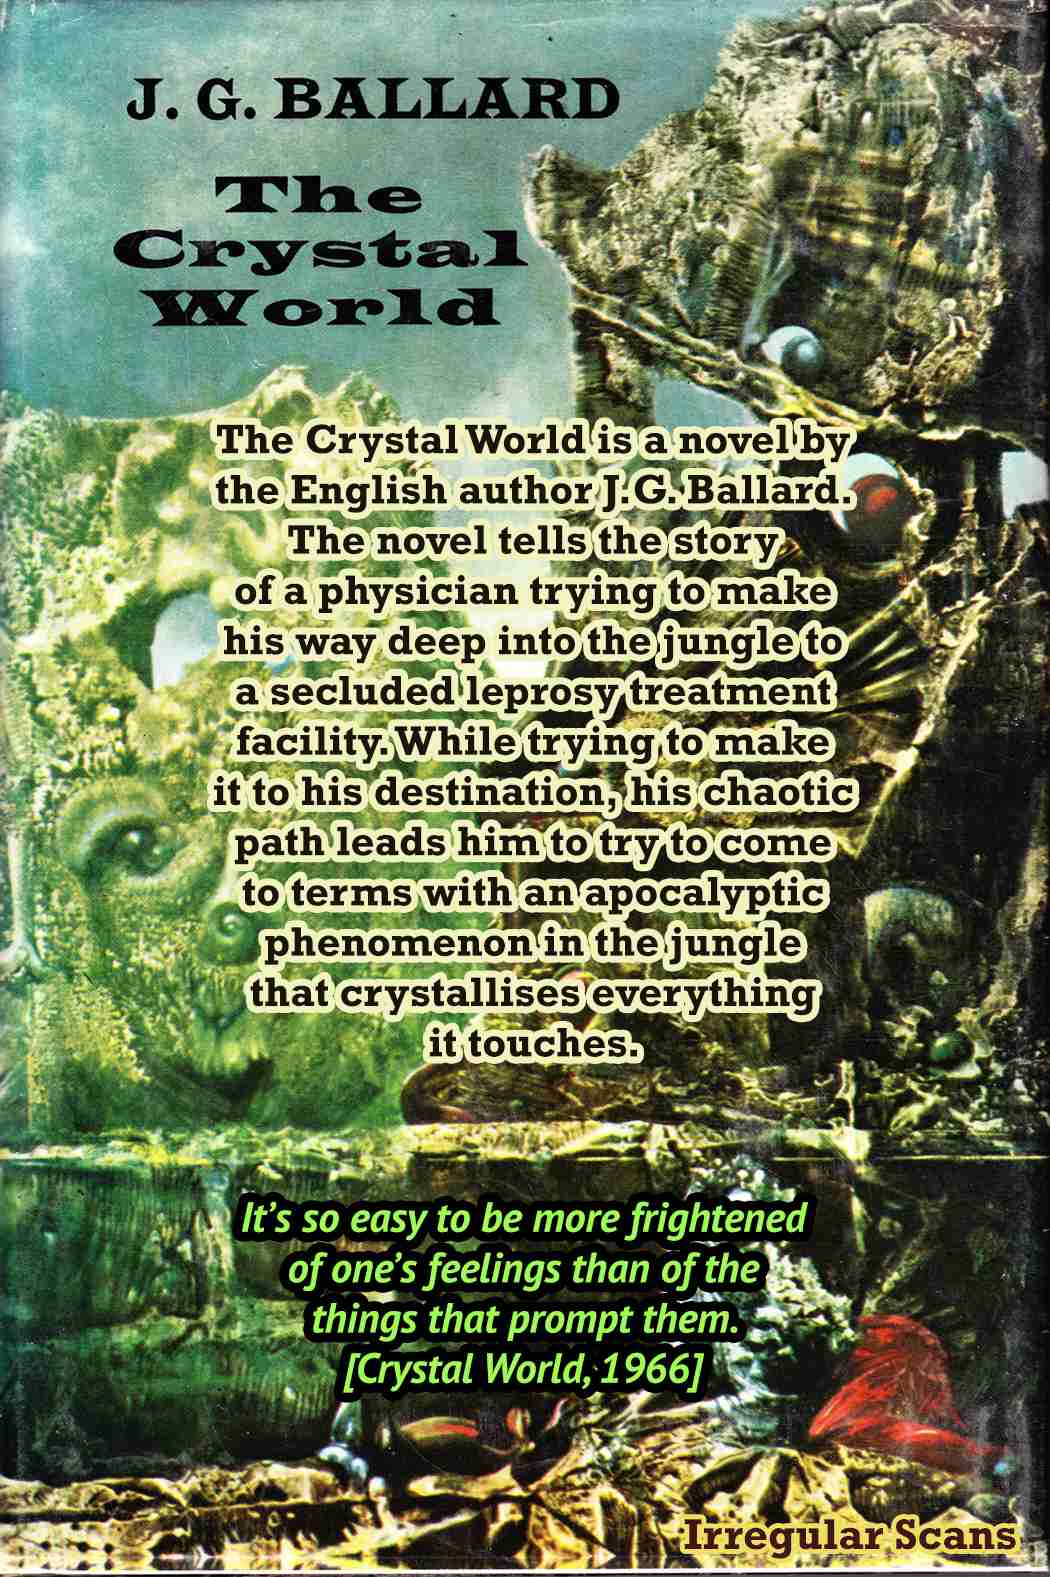 Rocket Man Vol. 2 Ch. 4 The Crystal World